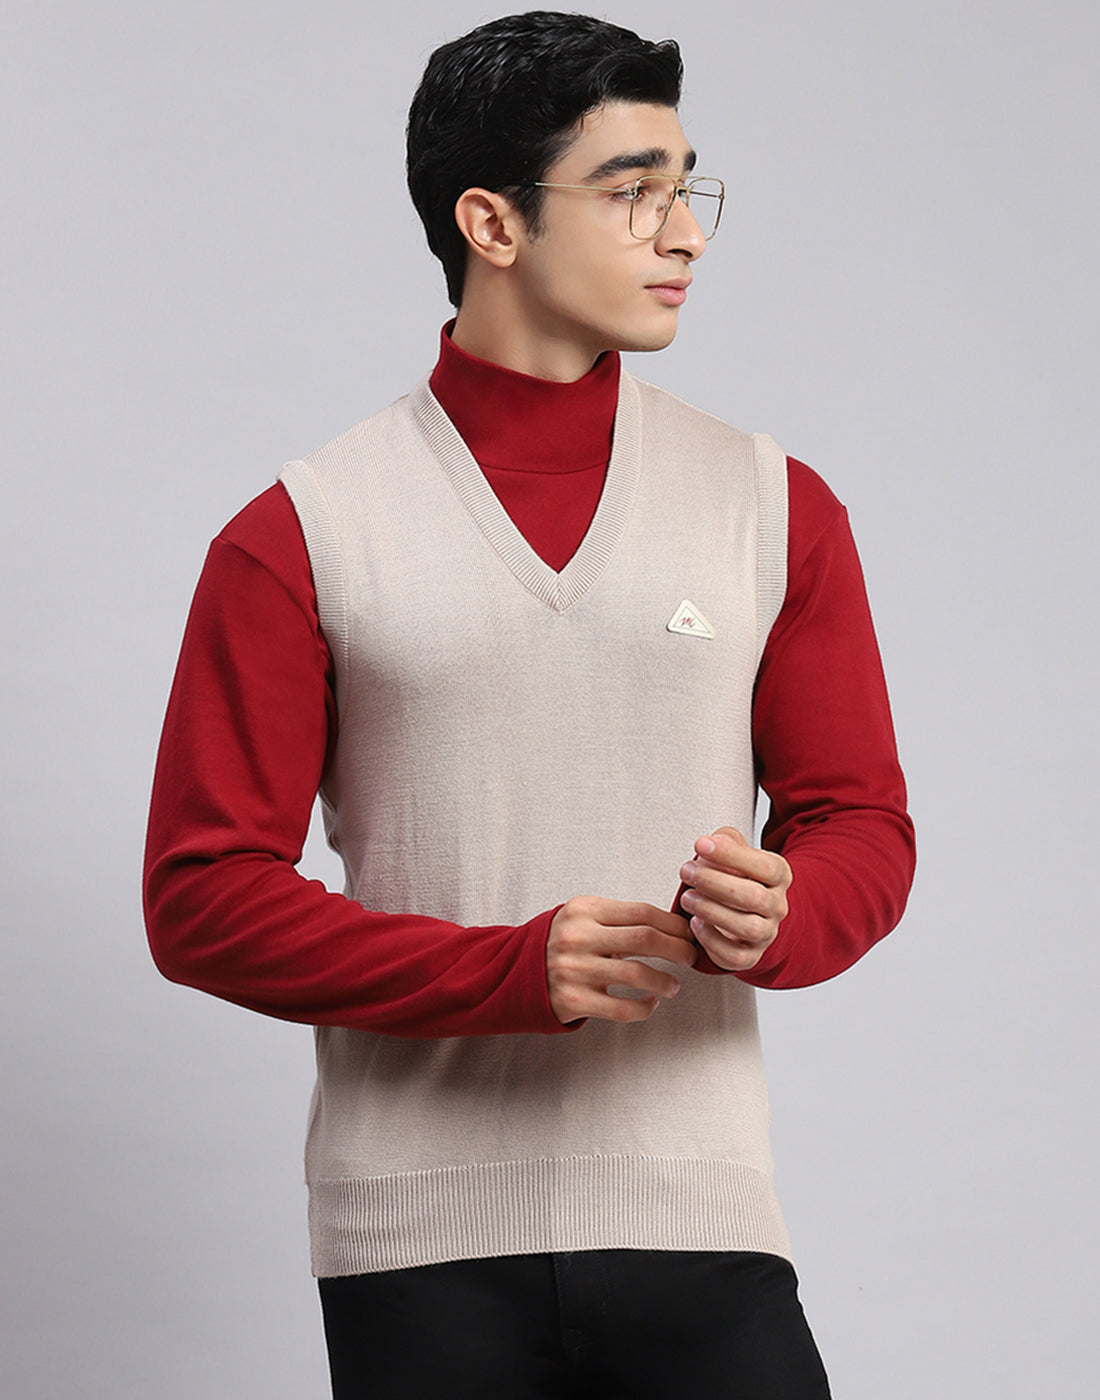 Buy Men Beige Solid V Neck Sleeveless Sweater Online in India